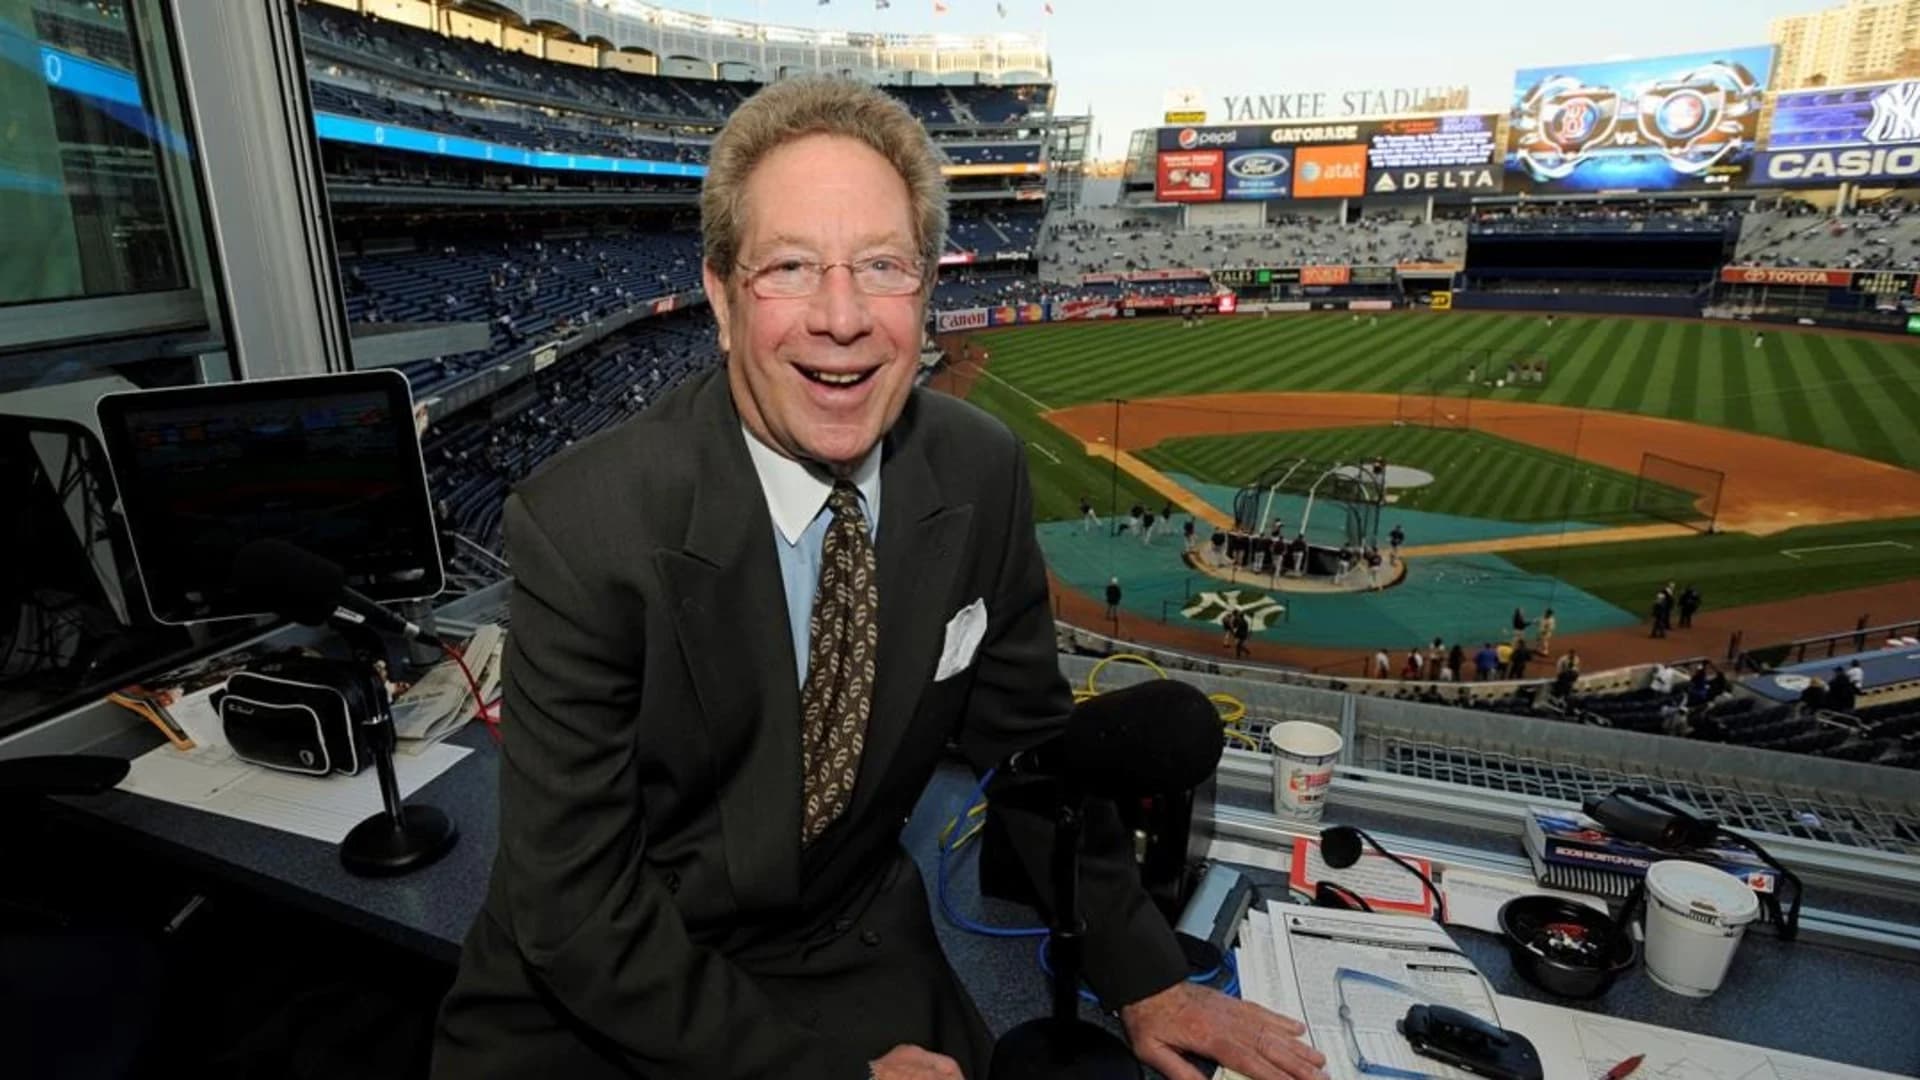 Yankees announcer John Sterling to end 30-year streak behind mic